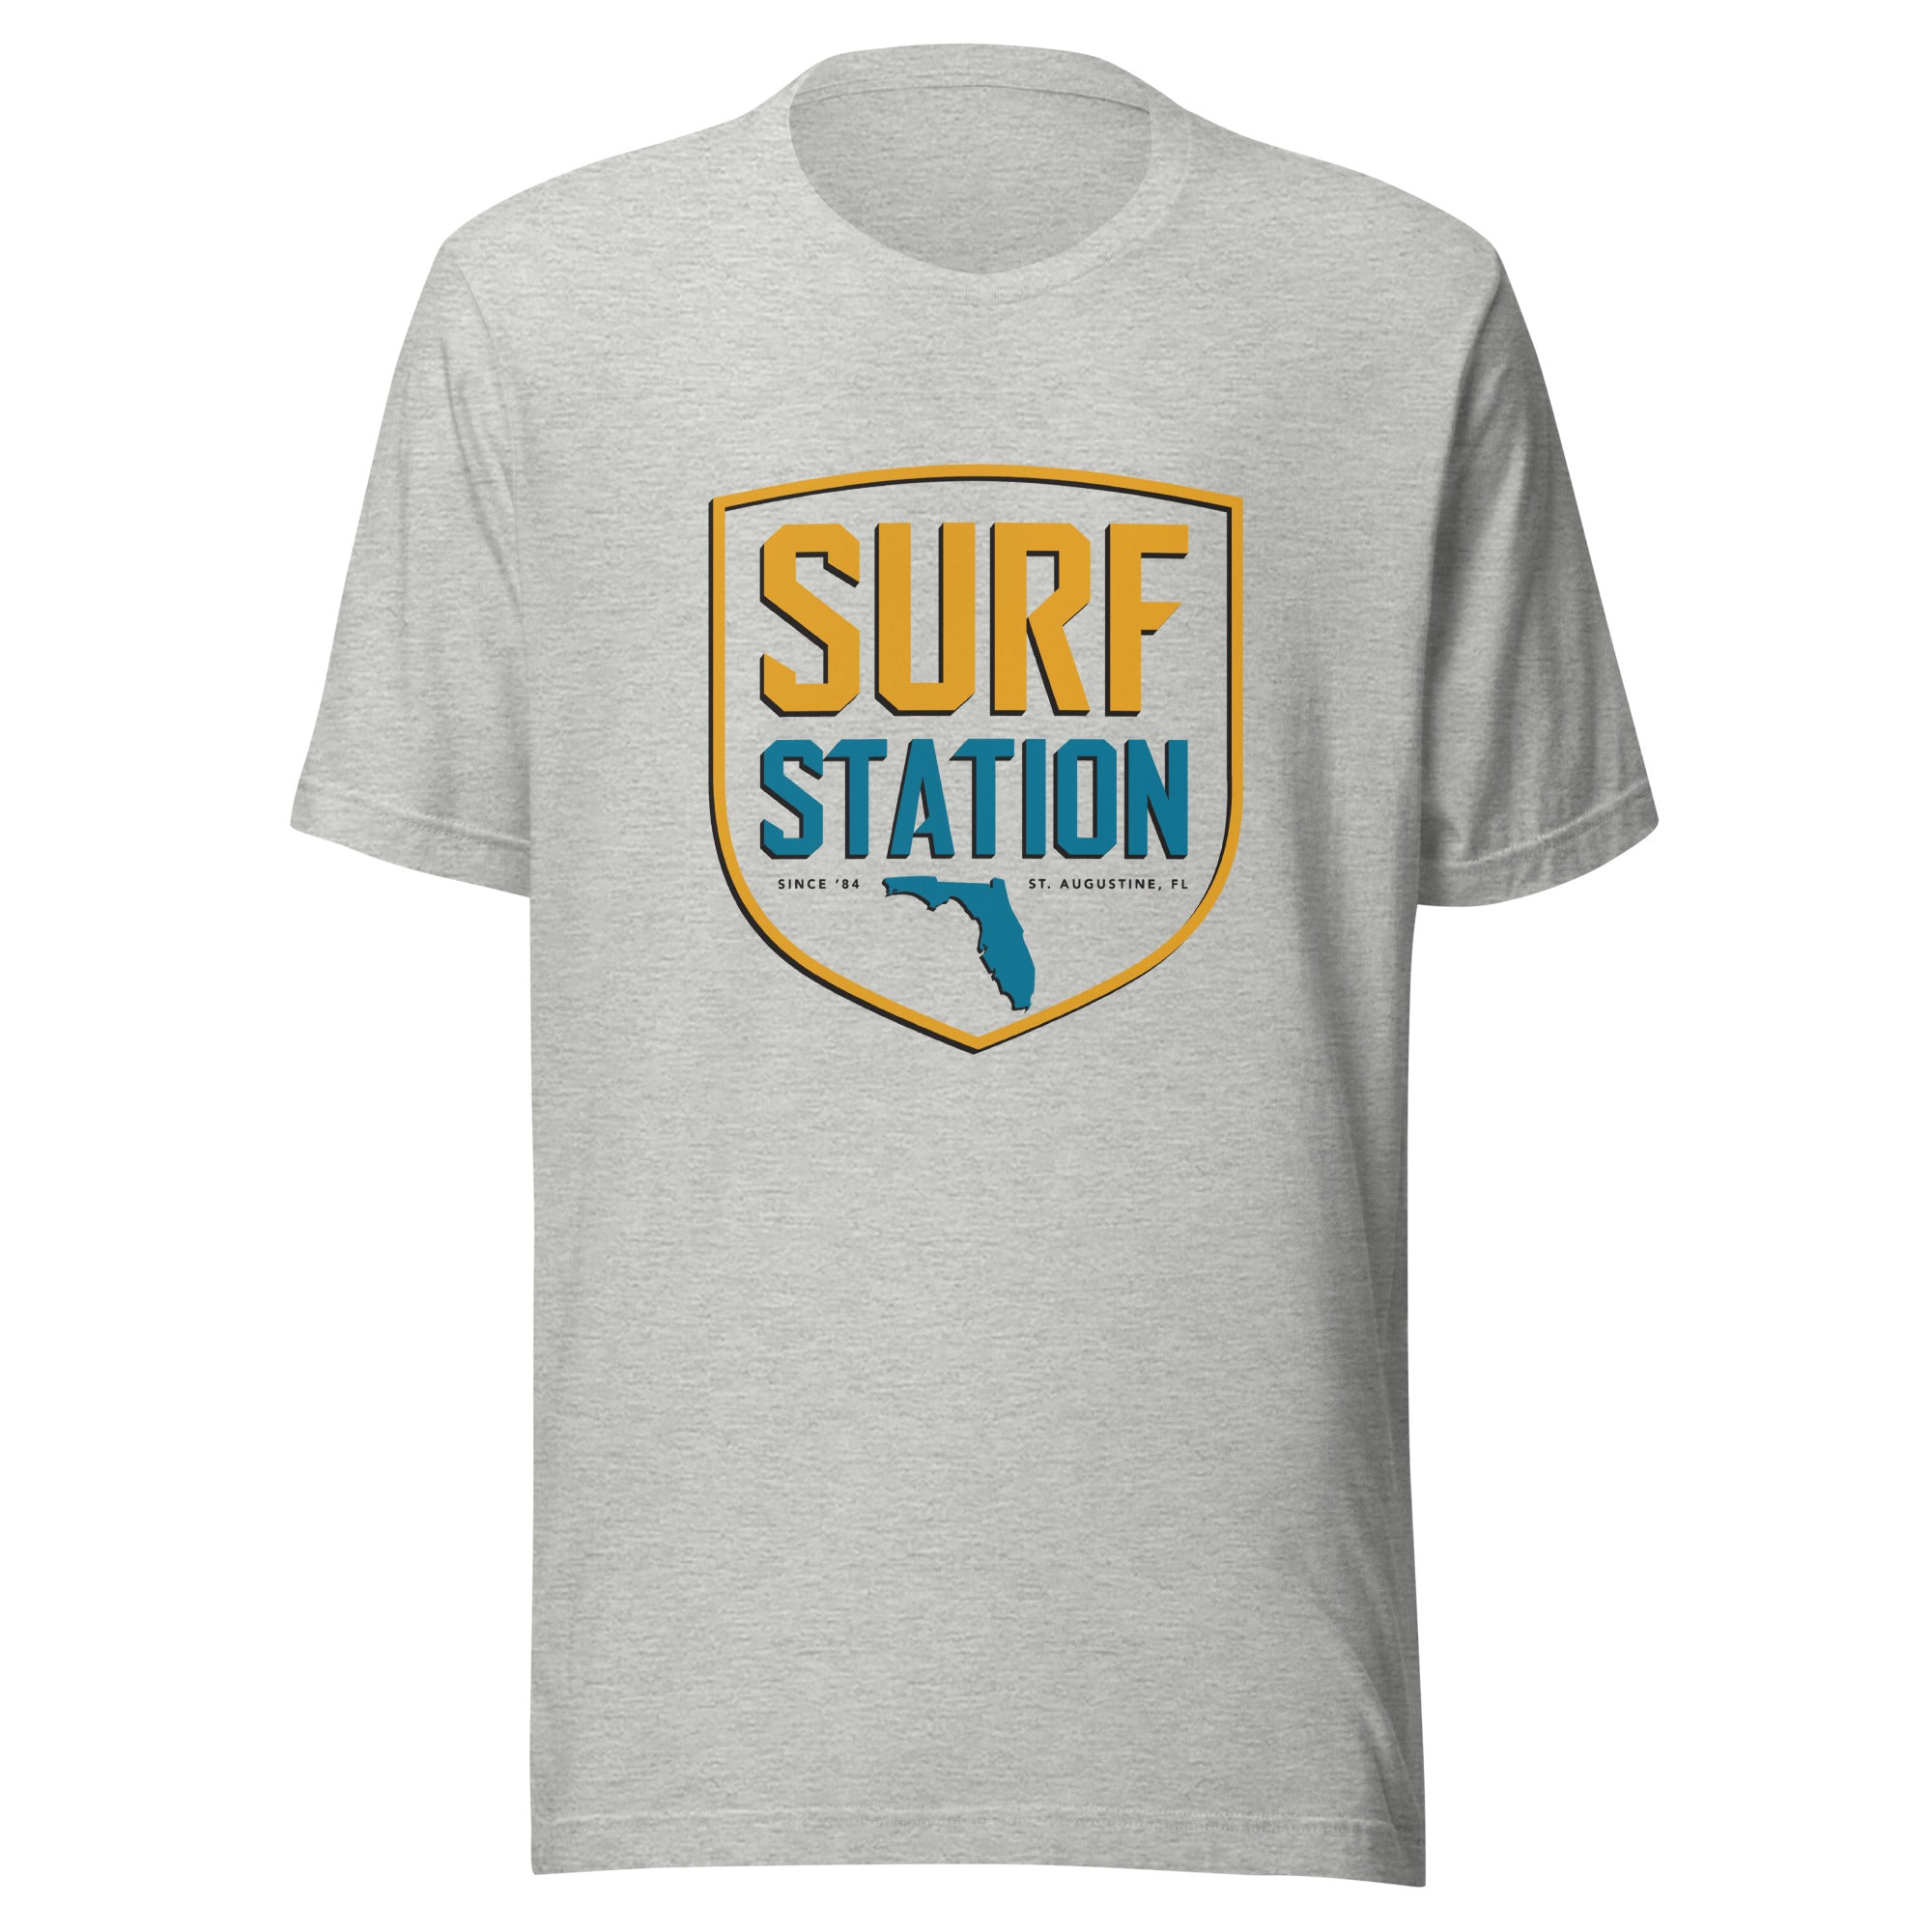 Surf Station Shield Men's S/S T-Shirt